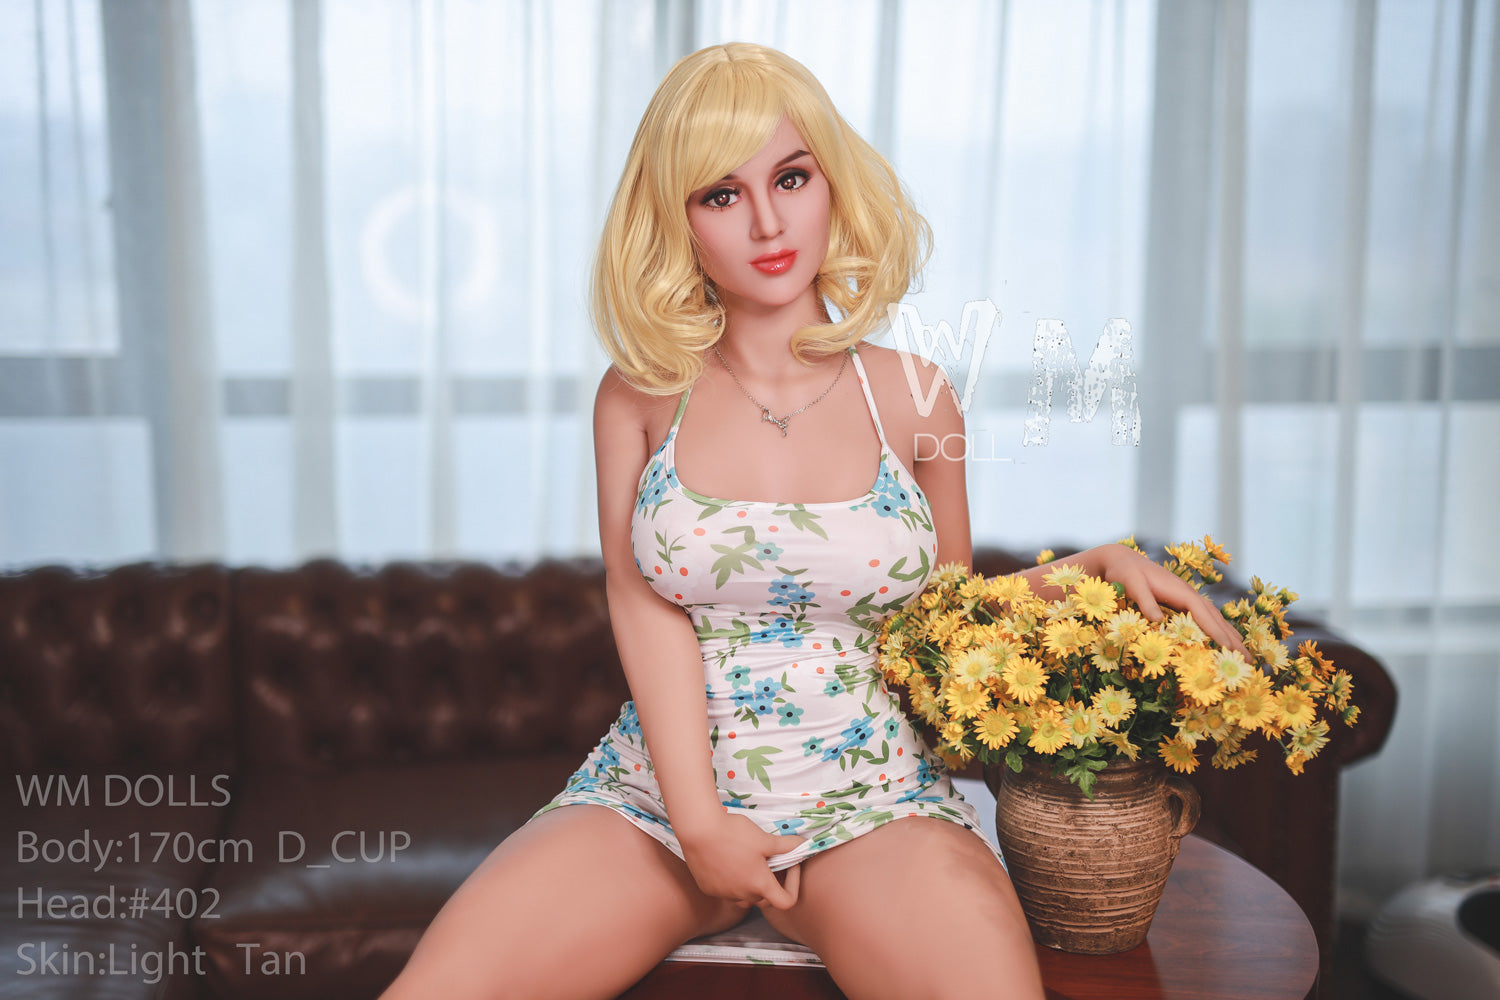 WM DOLL 170 CM D TPE - Sophie | Buy Sex Dolls at DOLLS ACTUALLY